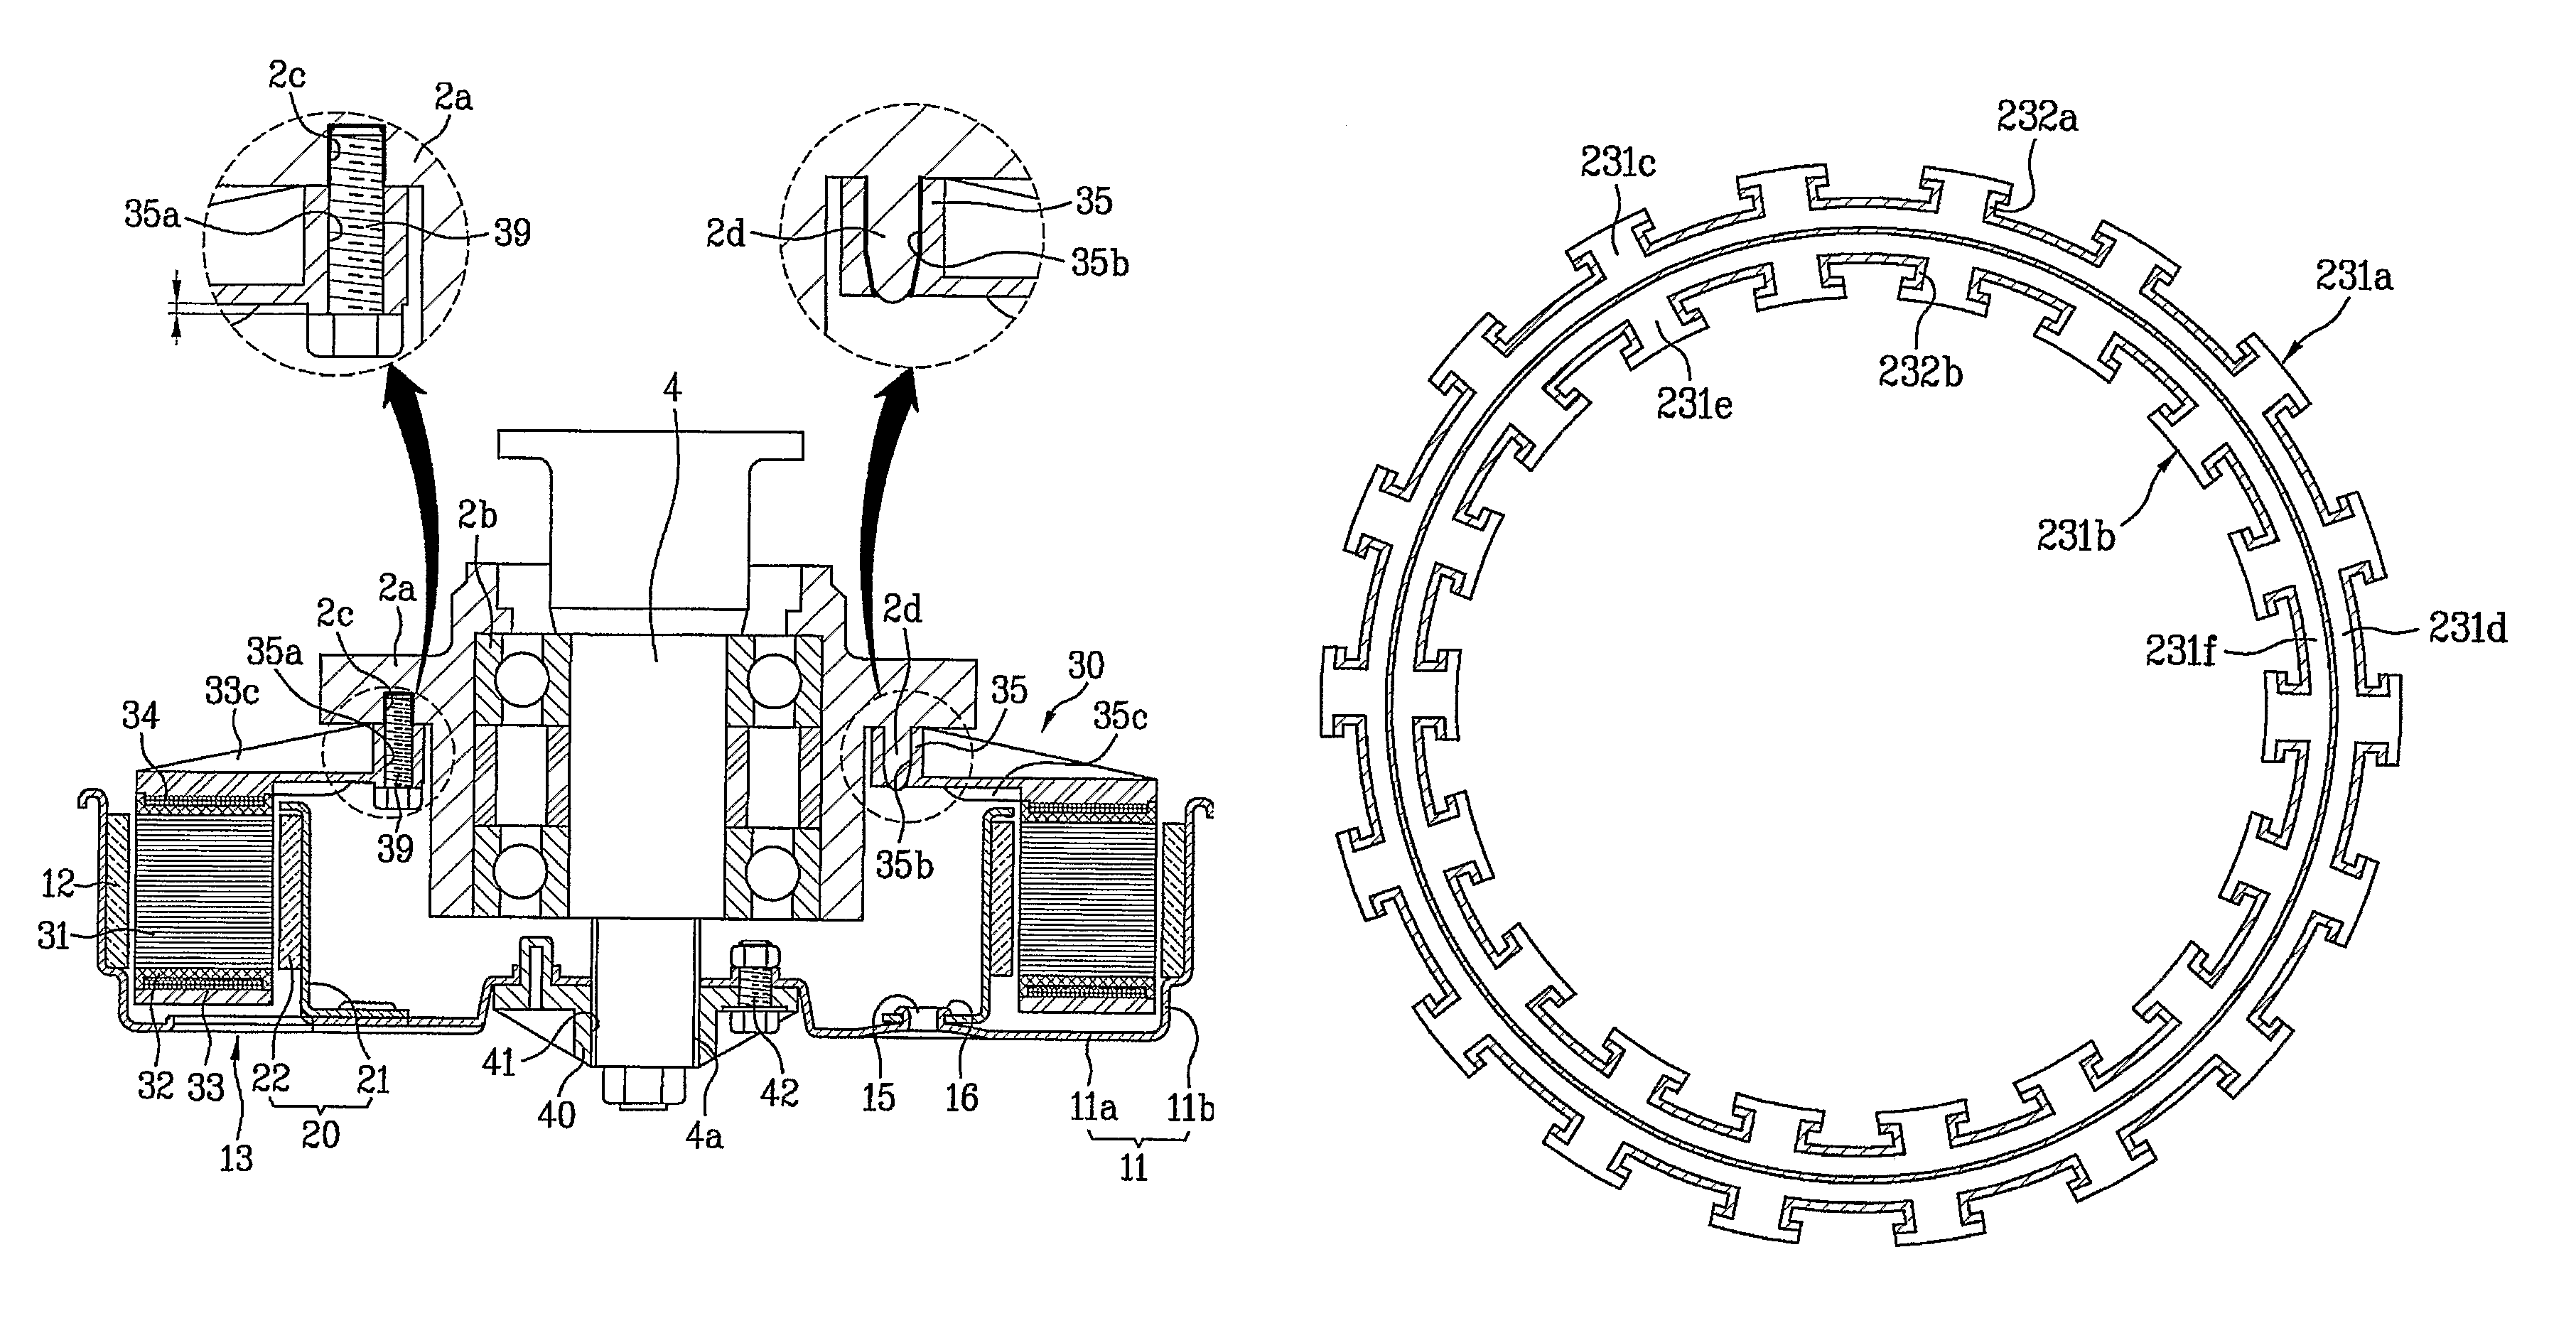 Dual rotor type motor